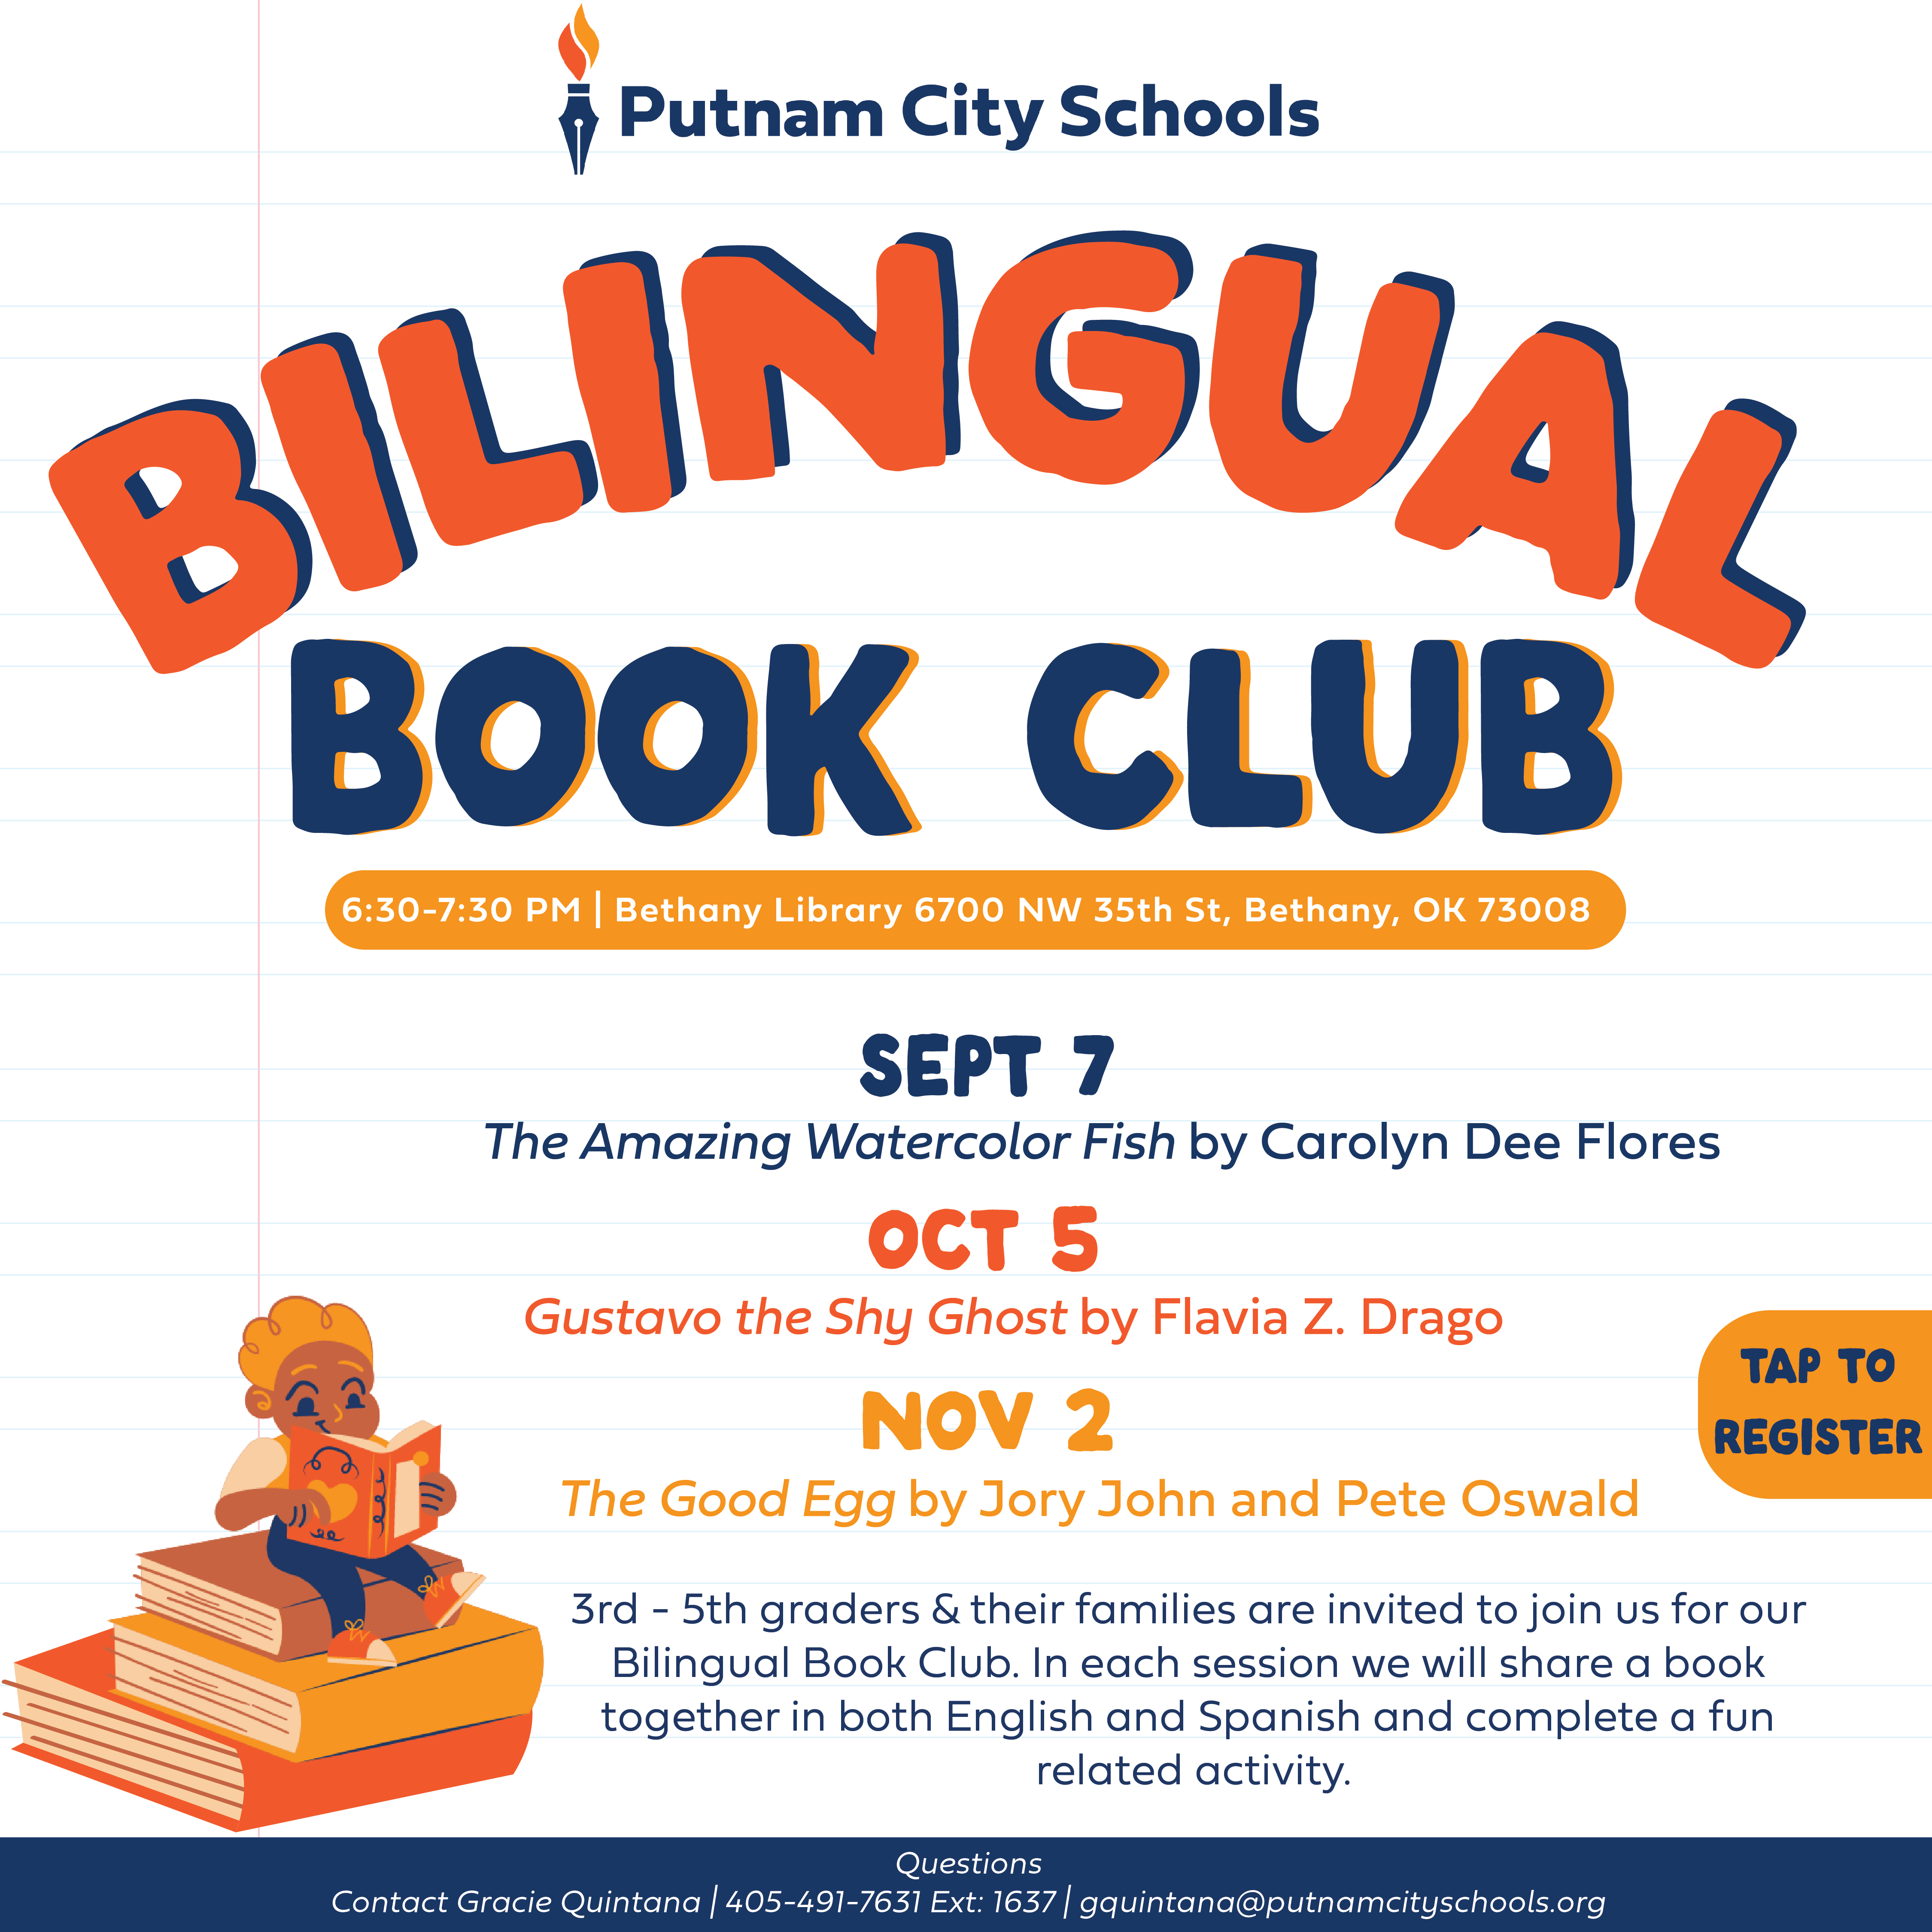 Bilingual book club sign up